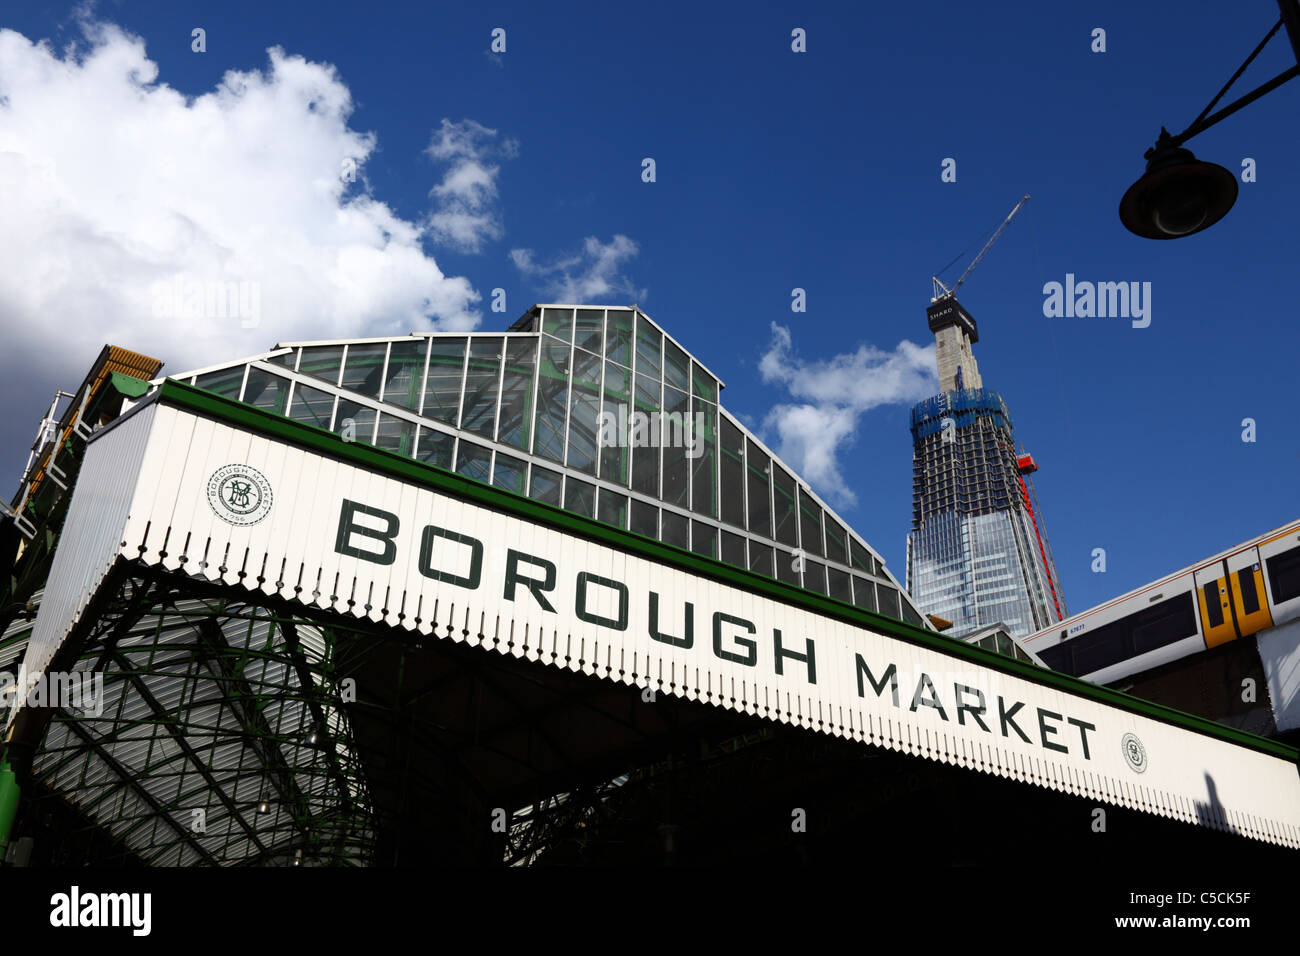 Entrance to Borough Market, Shard London Bridge Building under construction in background, Southwark, London, England Stock Photo